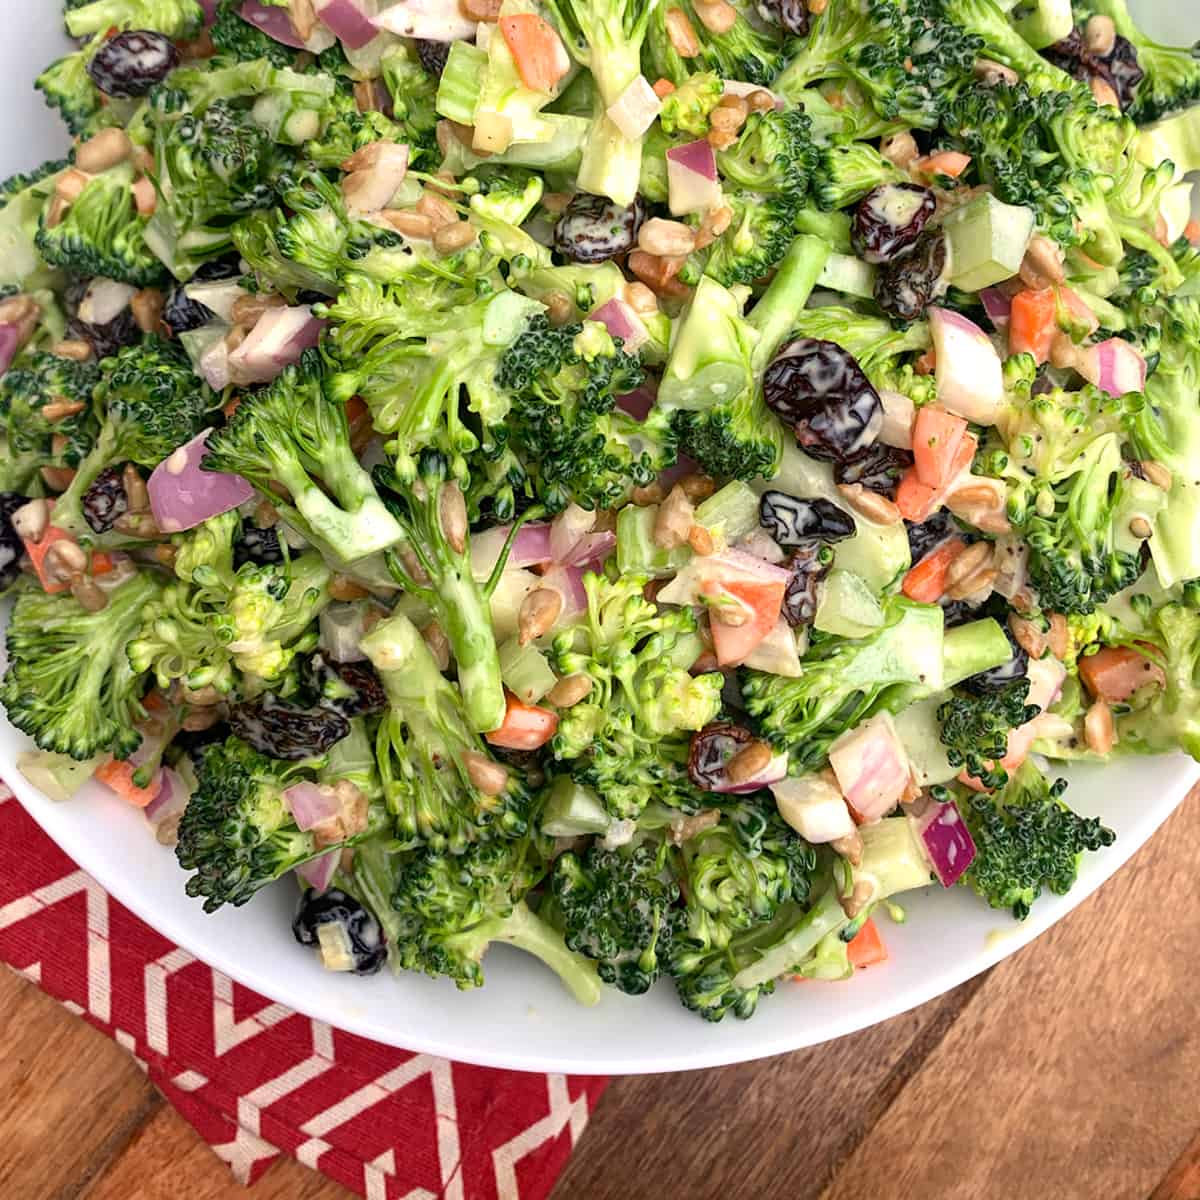 Deli Style Broccoli Salad - The Daring Gourmet